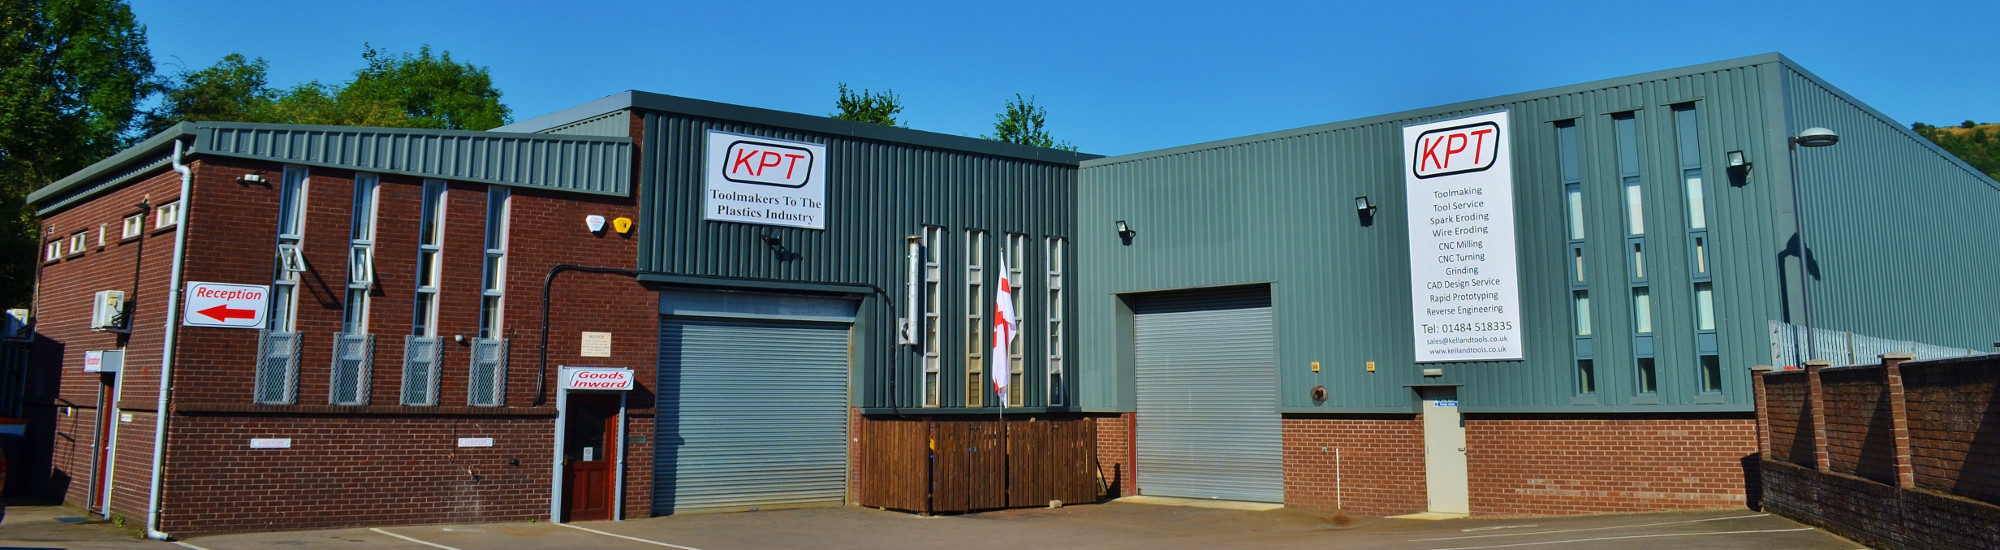 KPT Toolmaker Facility - Huddersfield, West Yorkshire